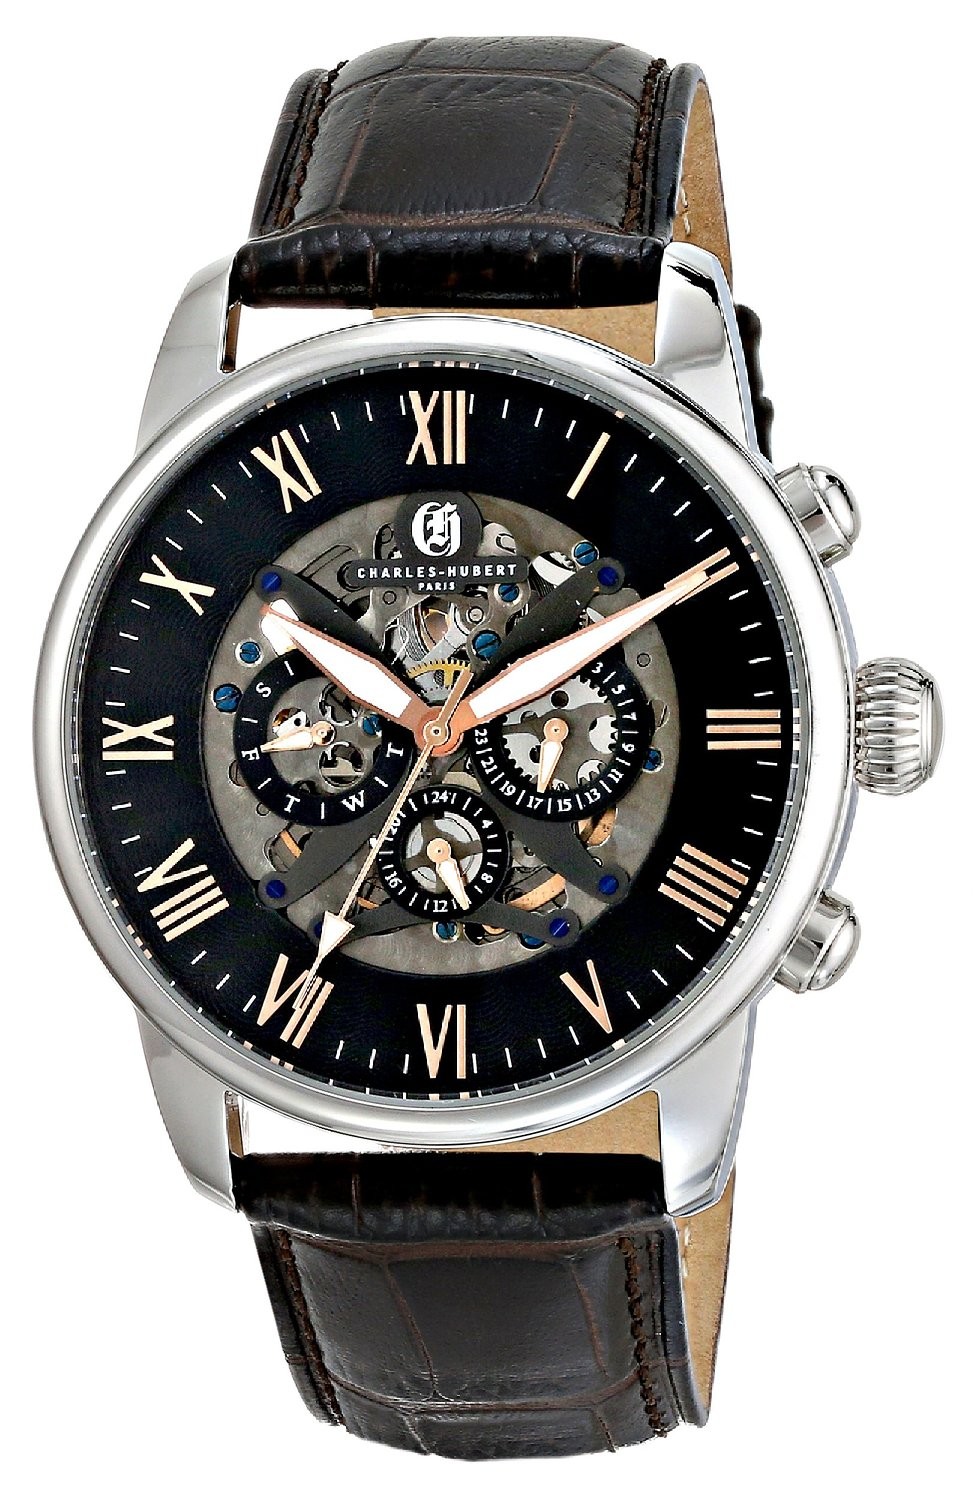 Charles-Hubert Paris Men's Stainless Steel Multifunction Automatic Watch